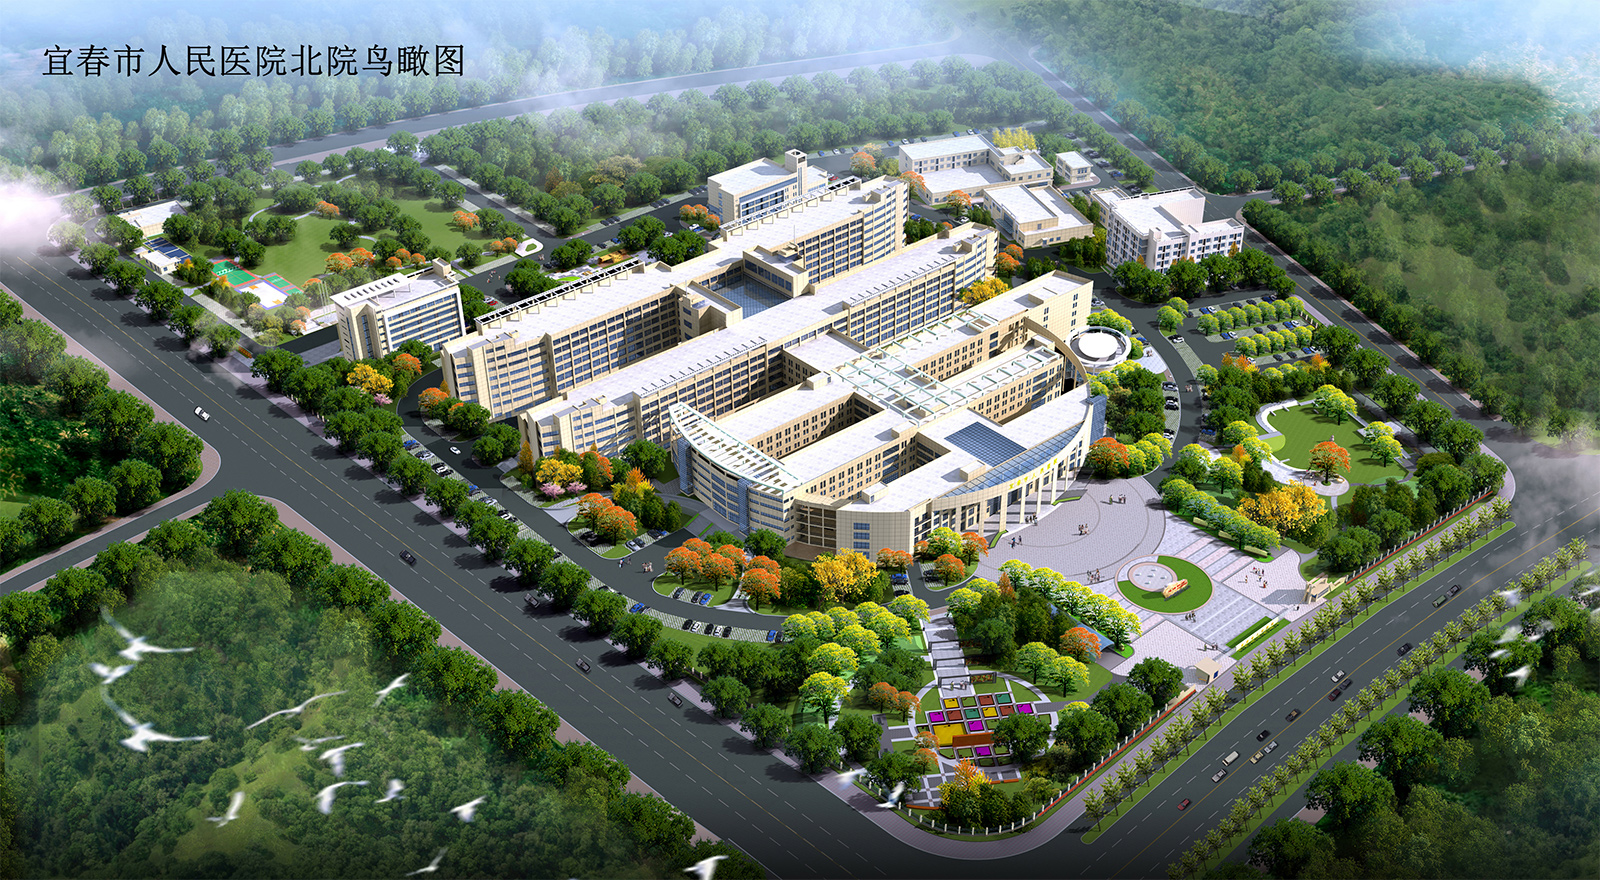 Yichun People’s Hospital North Hospital